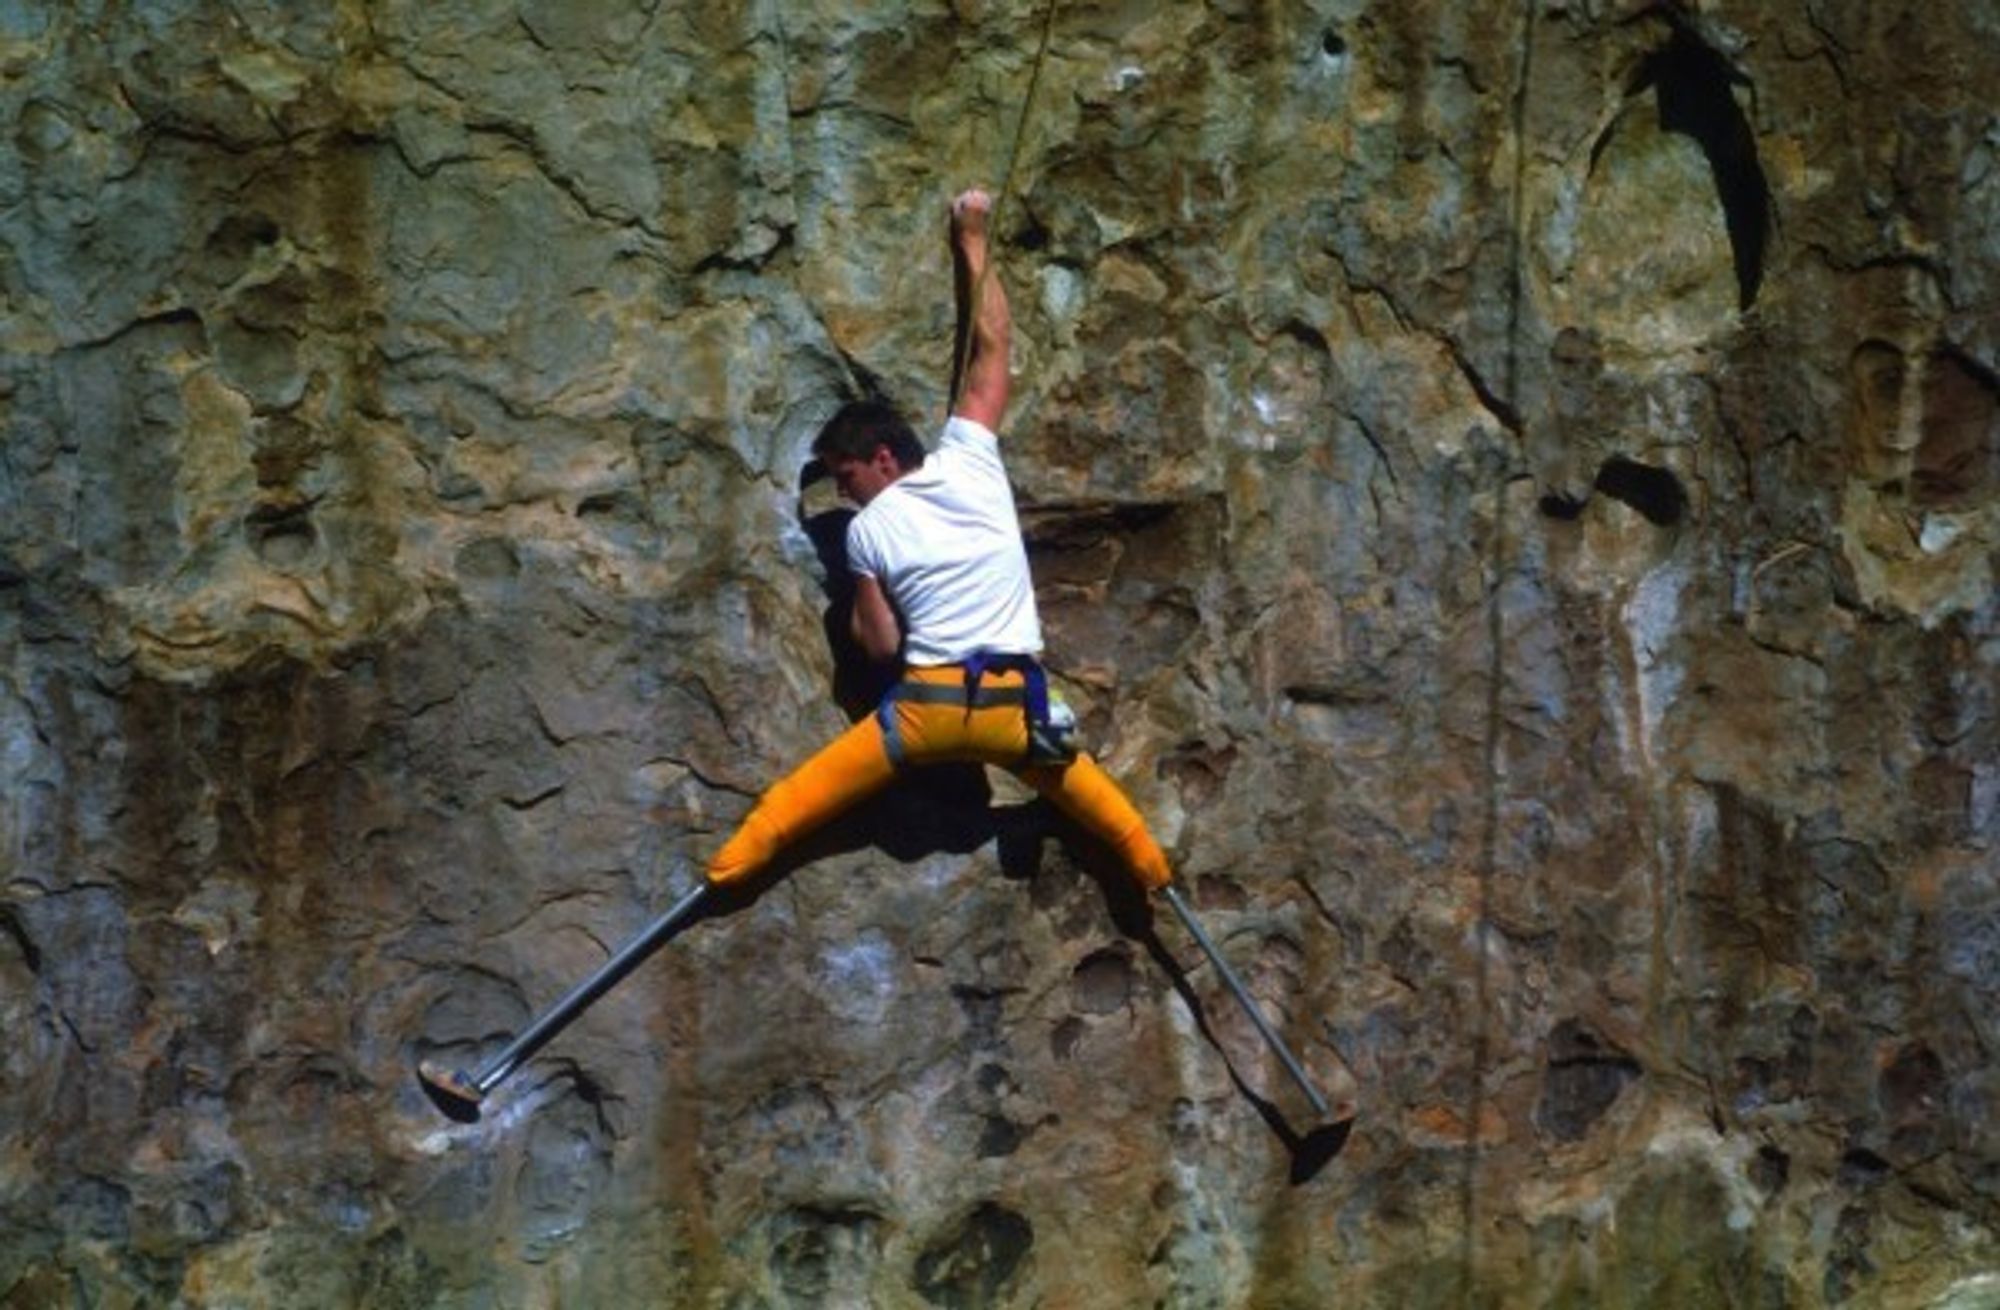 Hugh Herr climbing a rock face with long prosthetic legs.